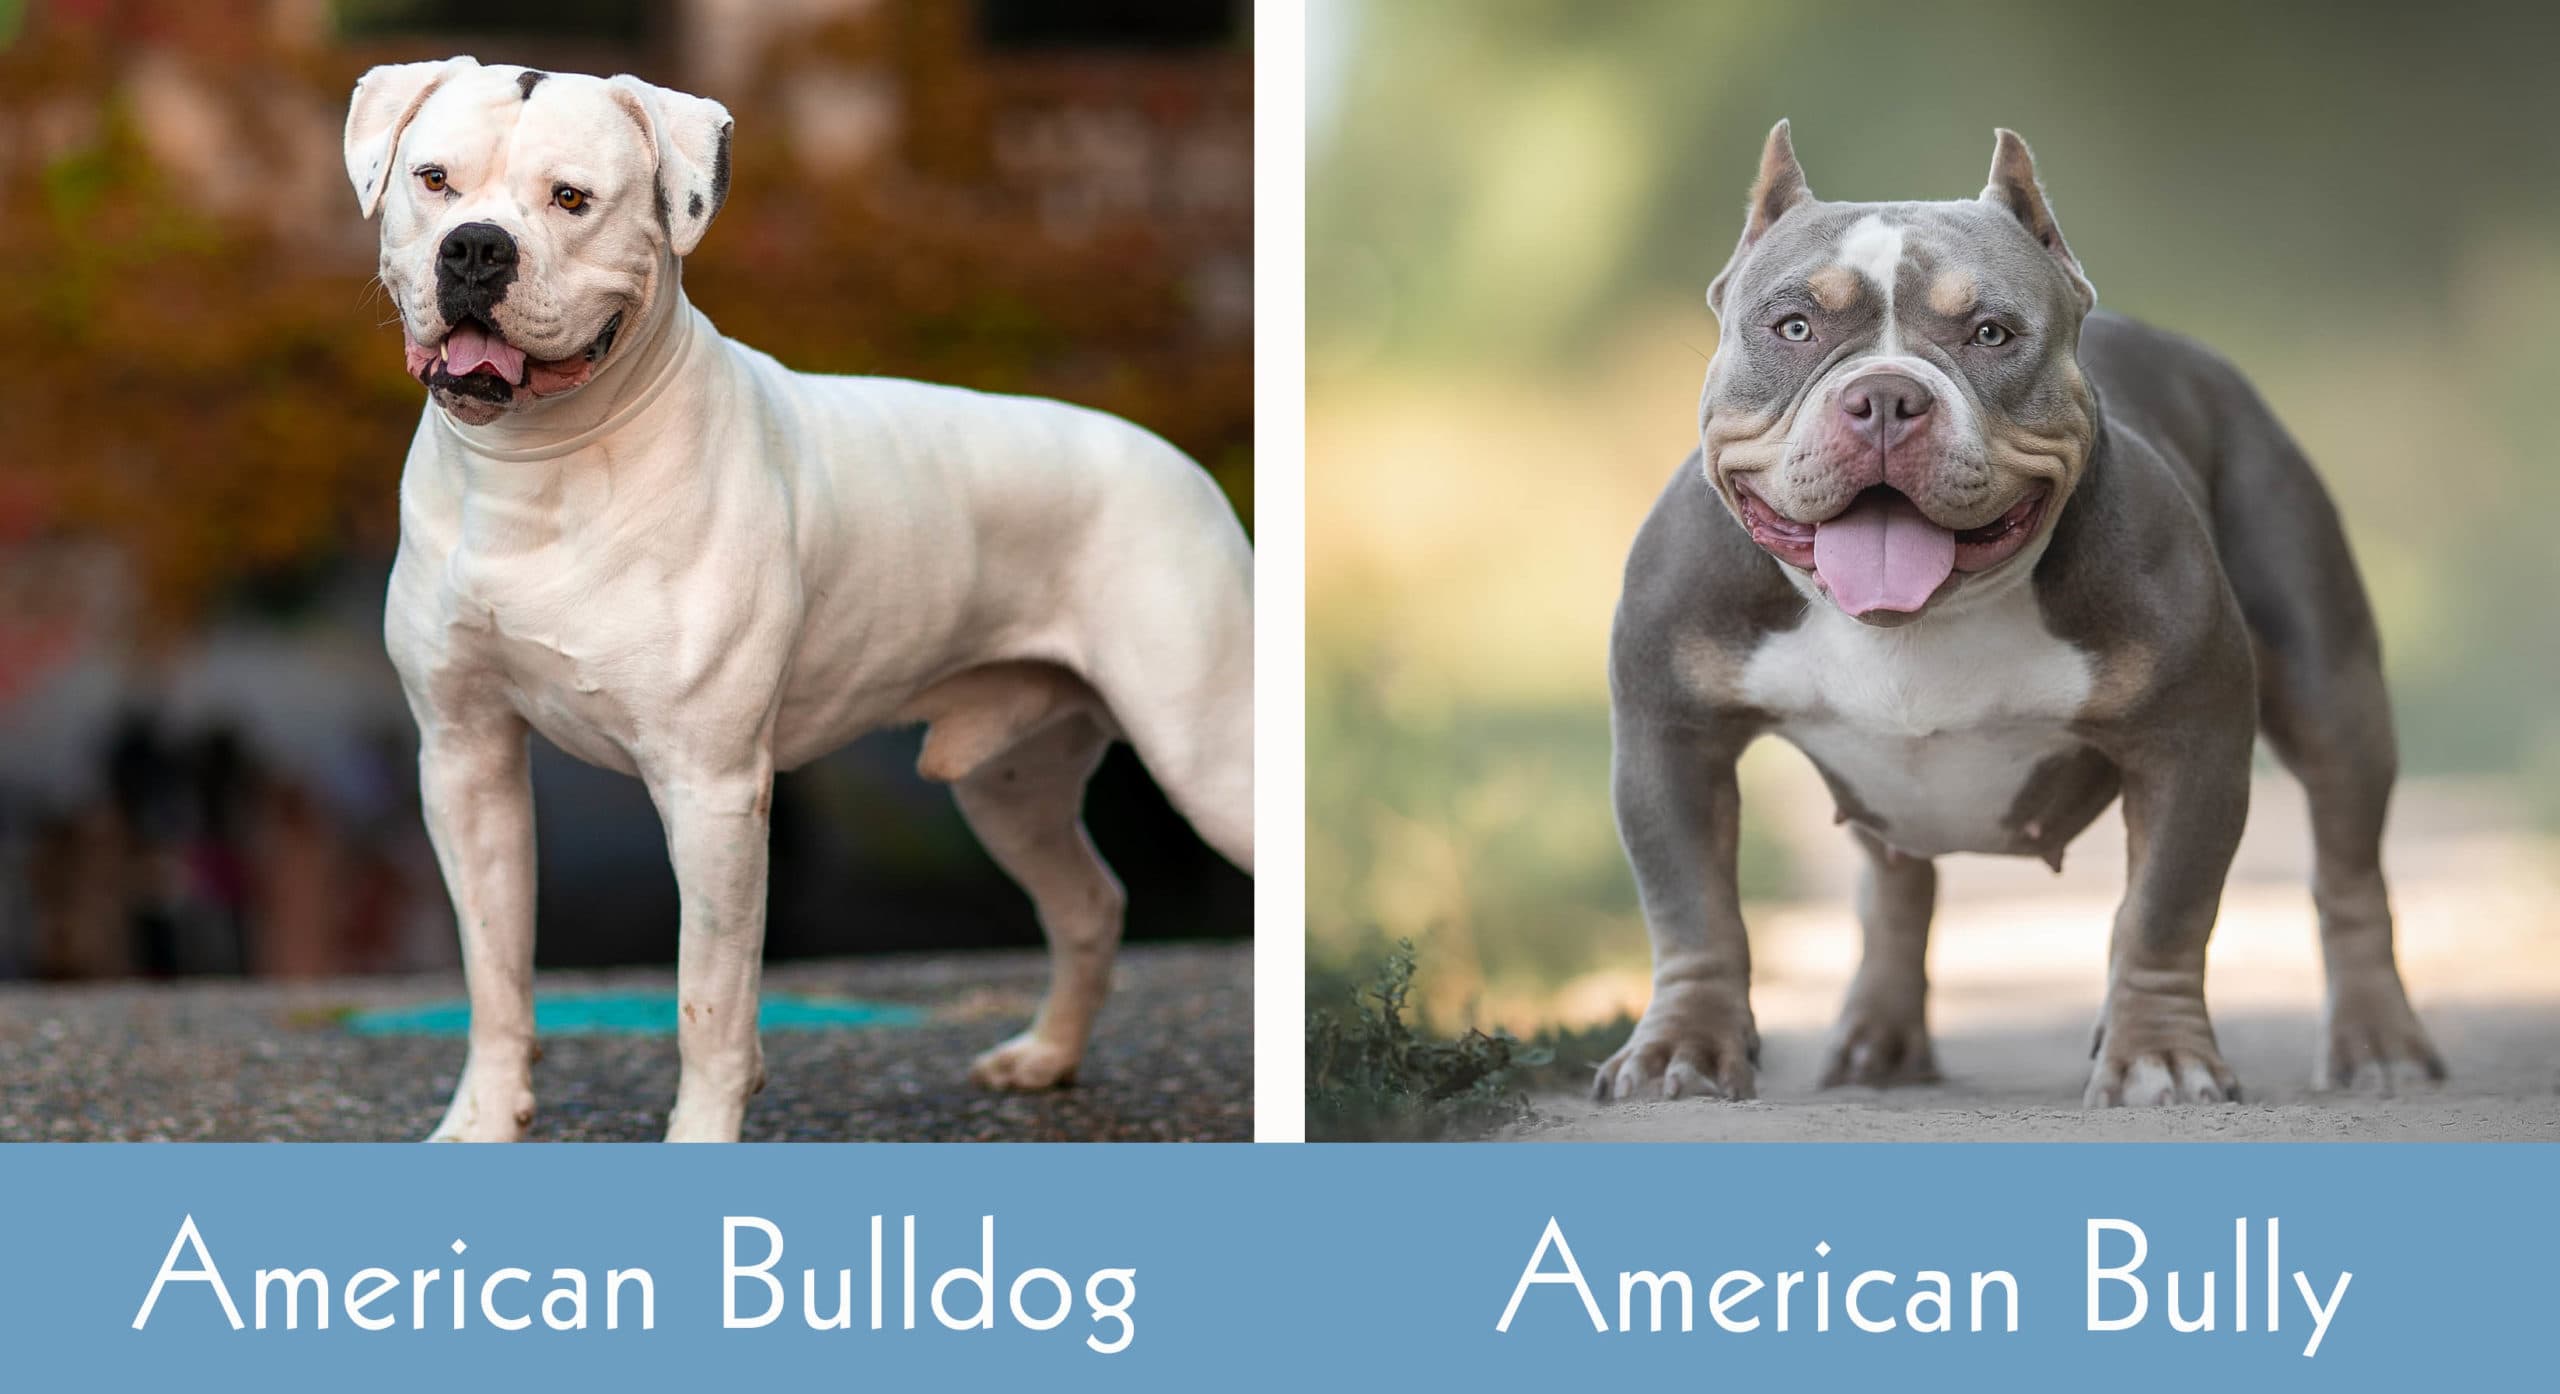 American Bully And American Bulldog?